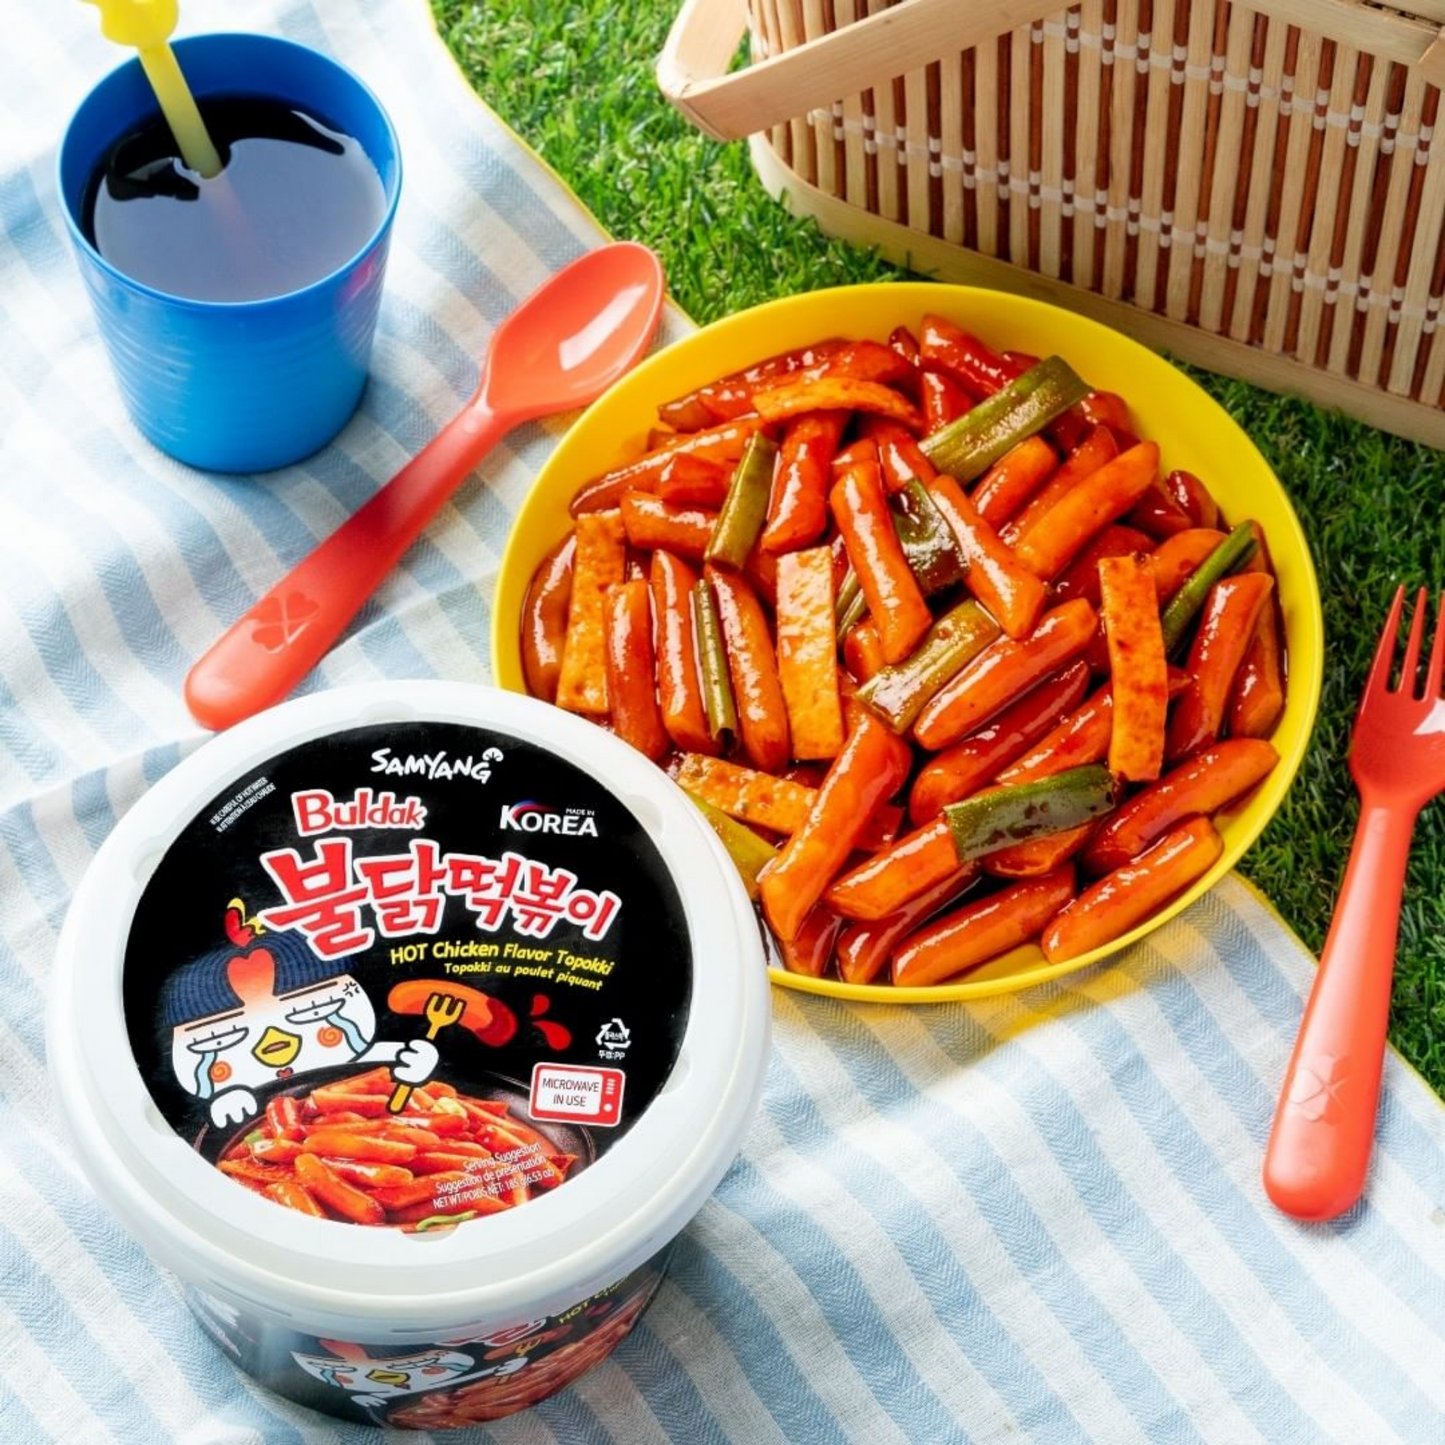 Samyang Original Buldak Hot Chicken Topokki Cup Box